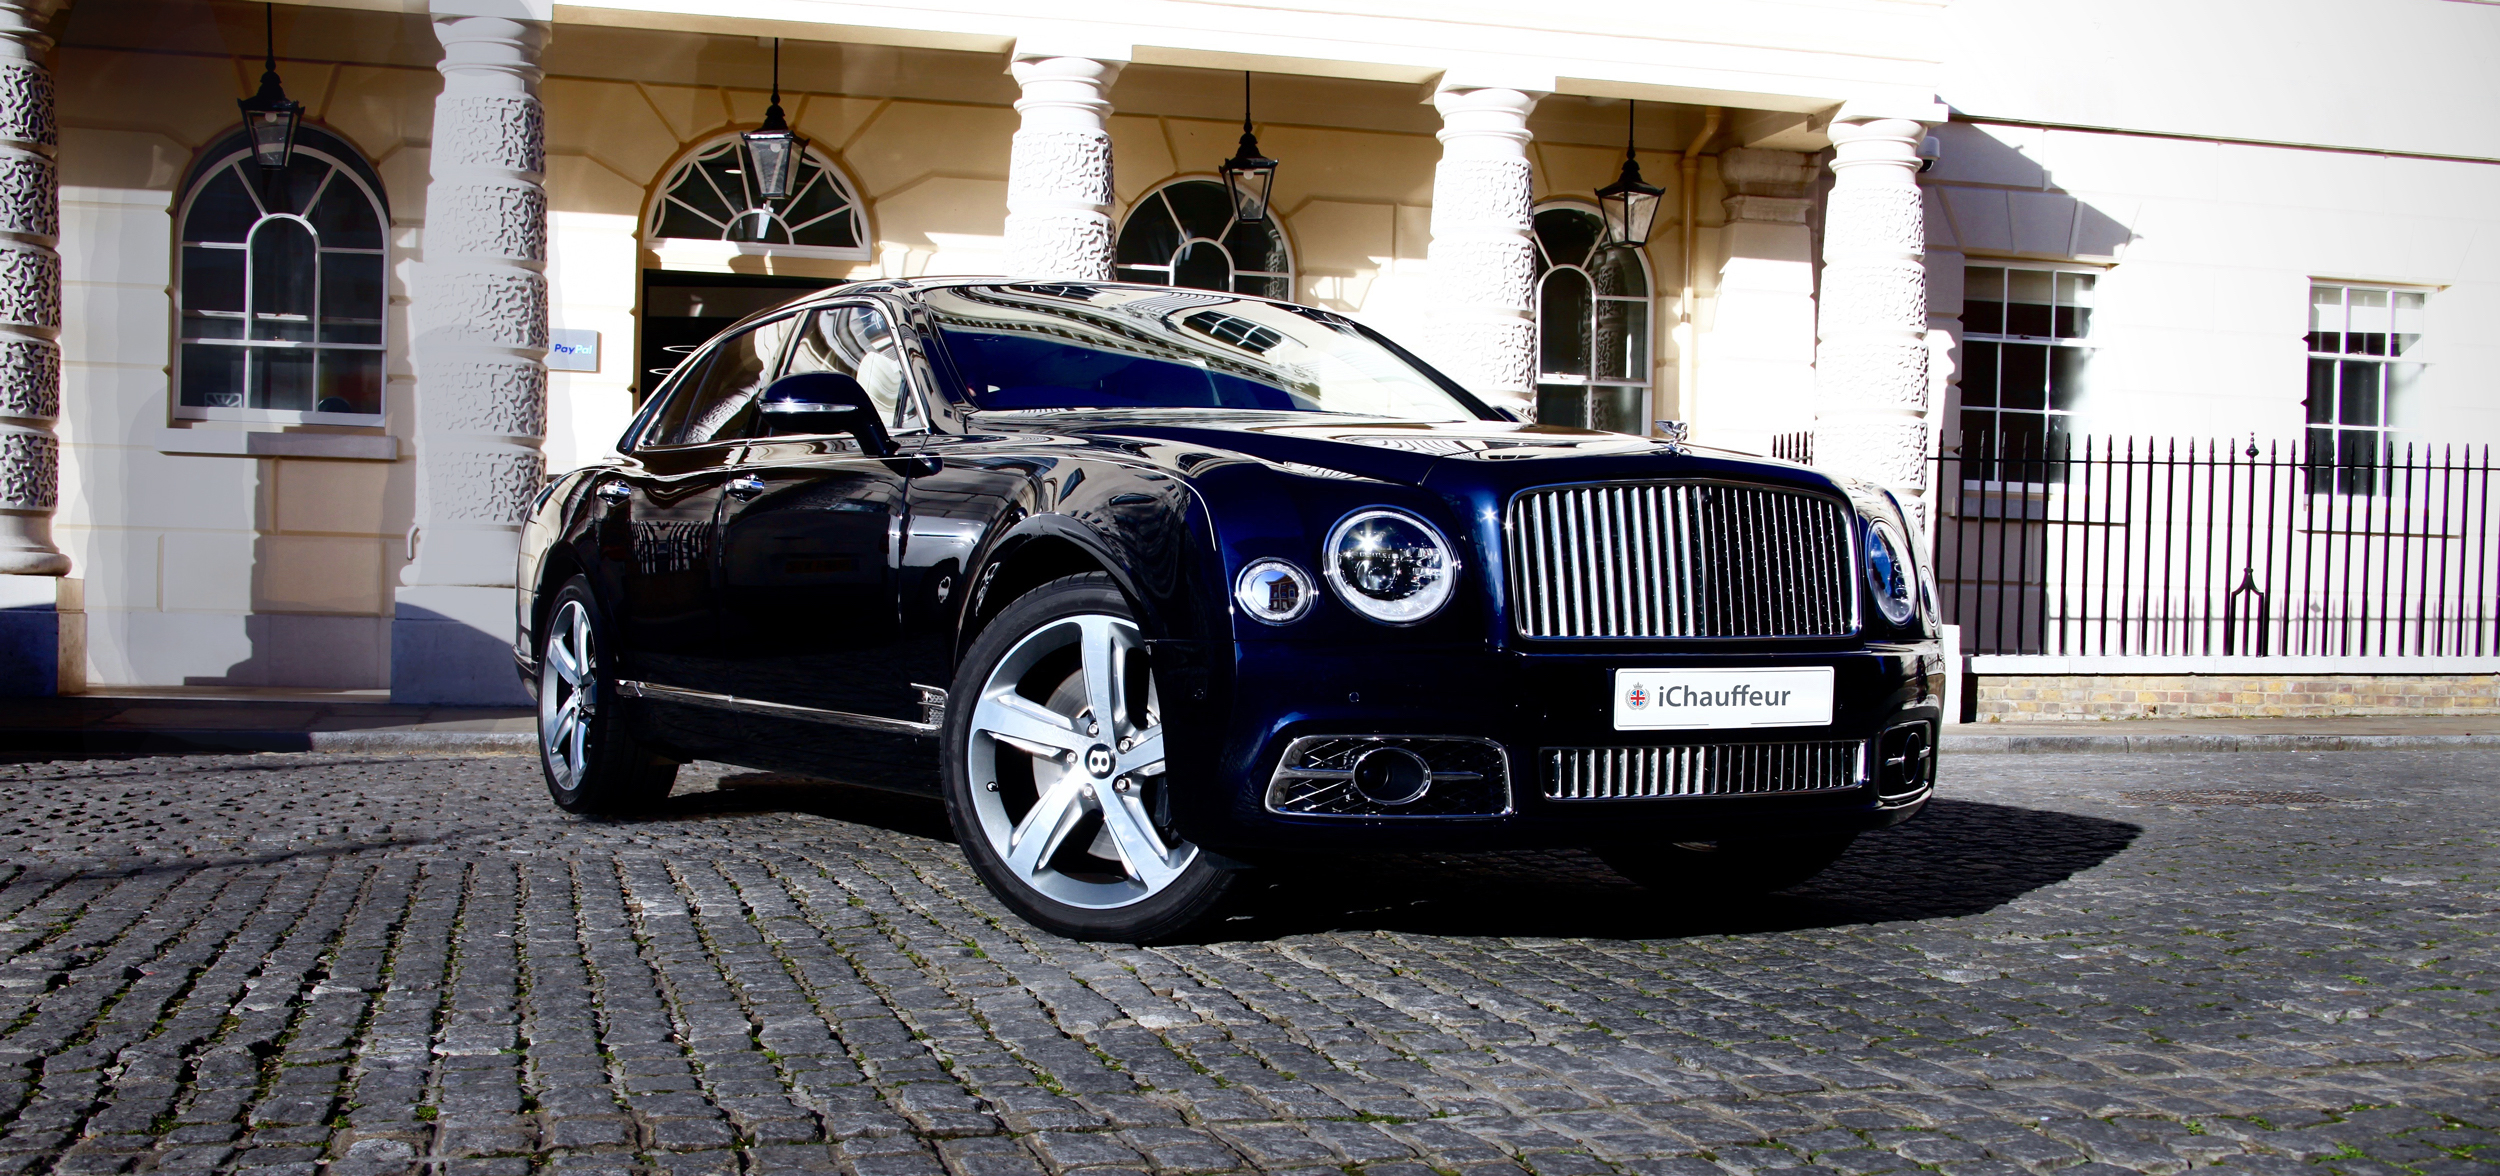 Bentley Mulsanne Chauffeur car in sunny London street